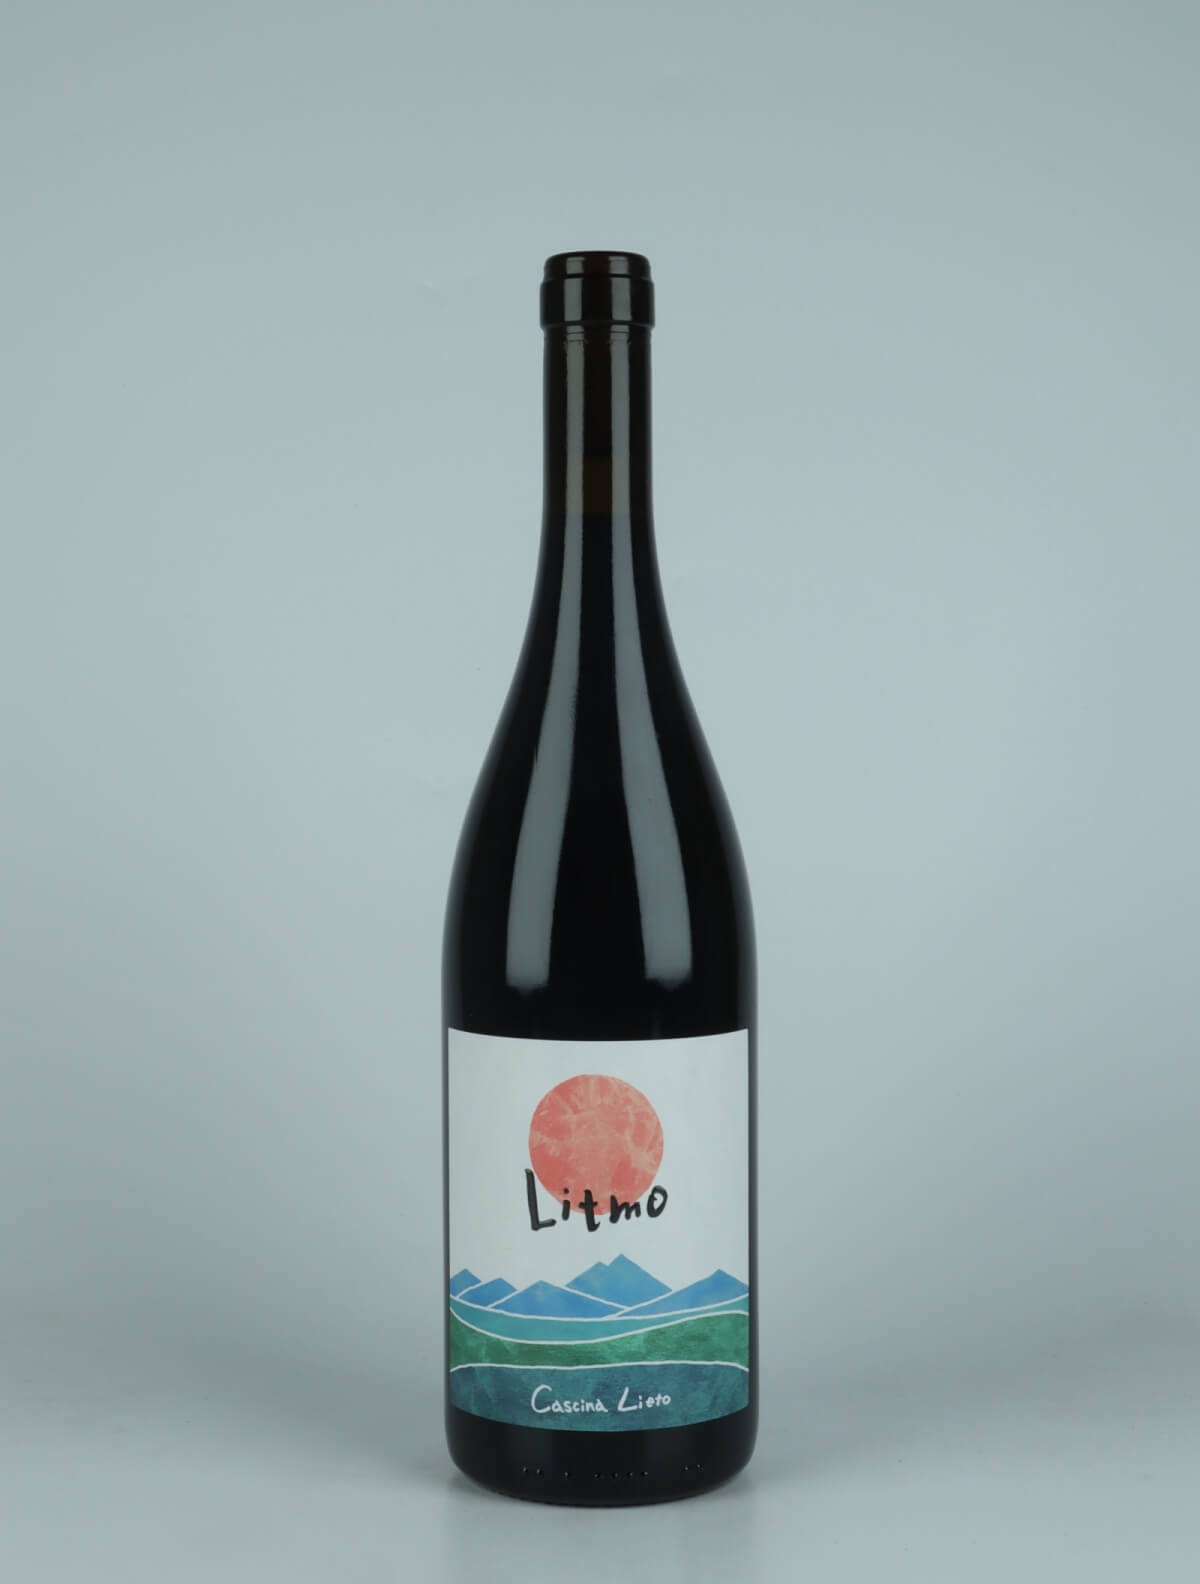 A bottle 2021 Rosso Litmo Red wine from Cascina Lieto, Piedmont in Italy